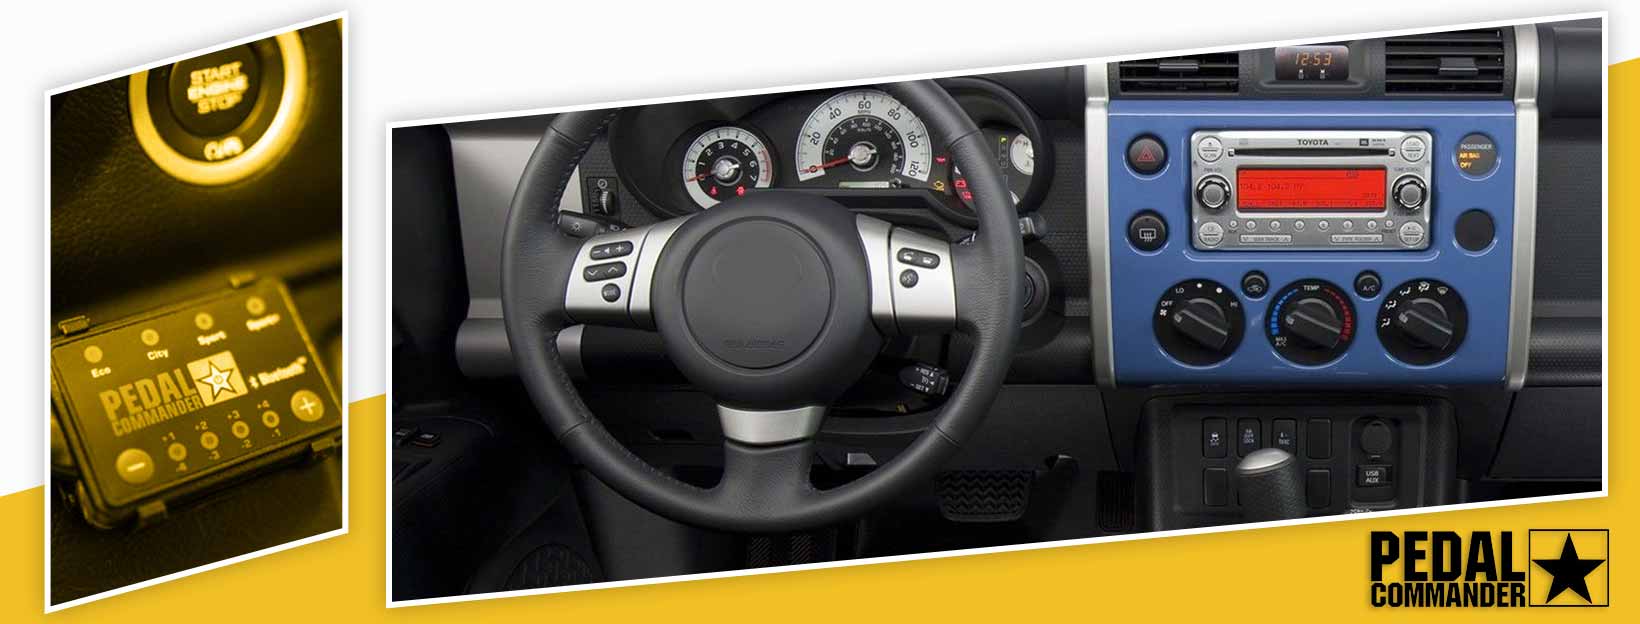 Pedal Commander for Toyota FJ Cruiser - interior